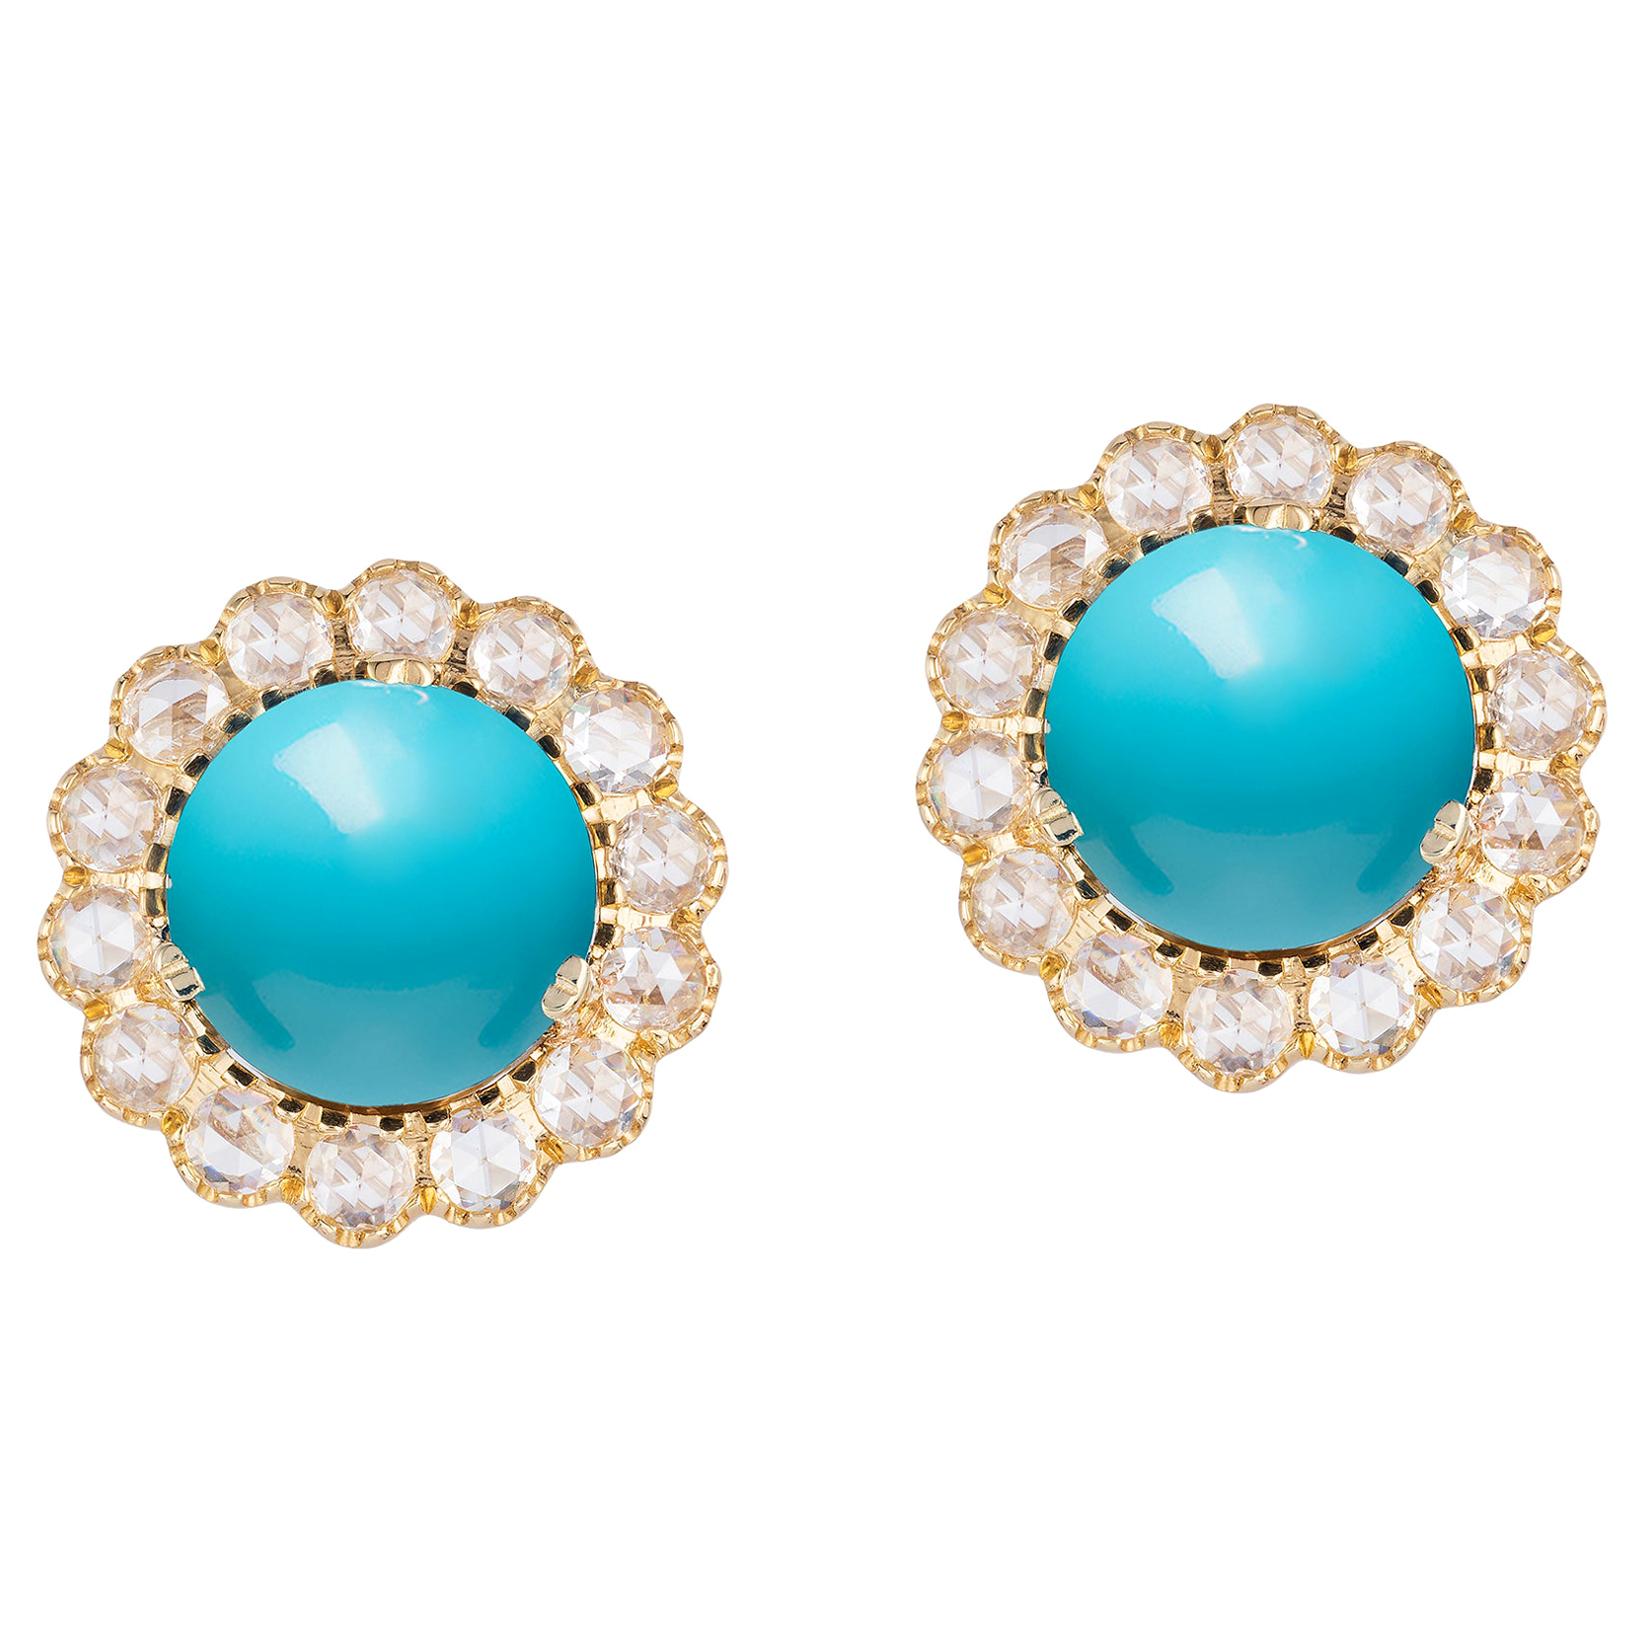 Goshwara Cabochon Turquoise And Rose Cut Diamond Earrings